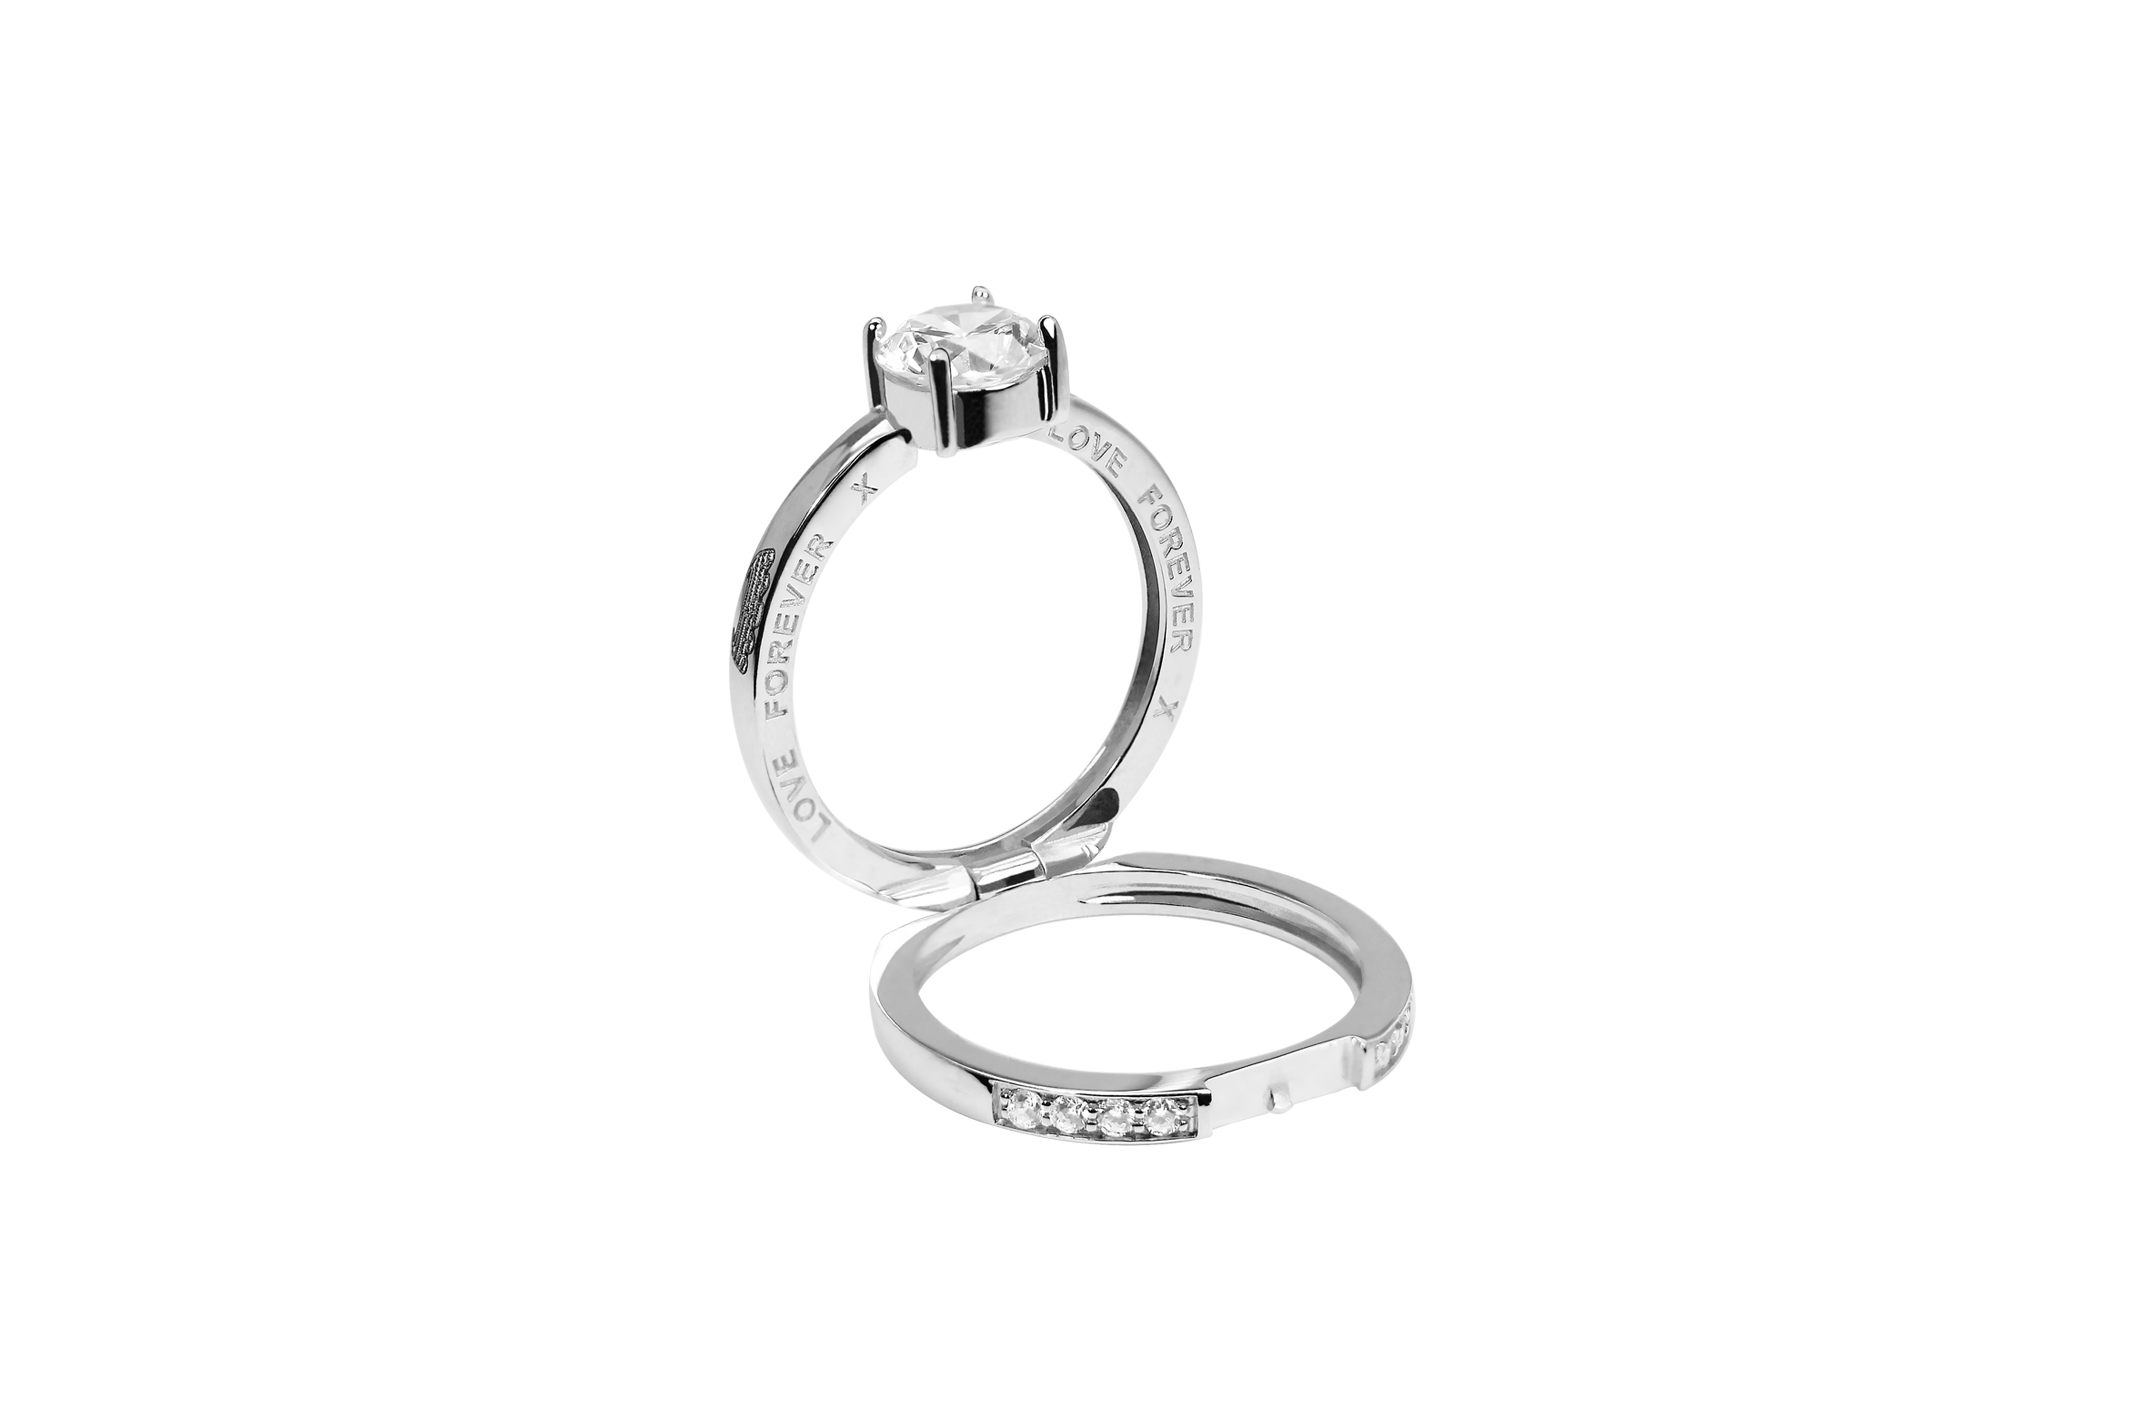 Joia: anel;Material: prata 925;Peso: 5.70 gr;Pedras: zircónias;Cor: branco;Medida: 14;Género: mulher